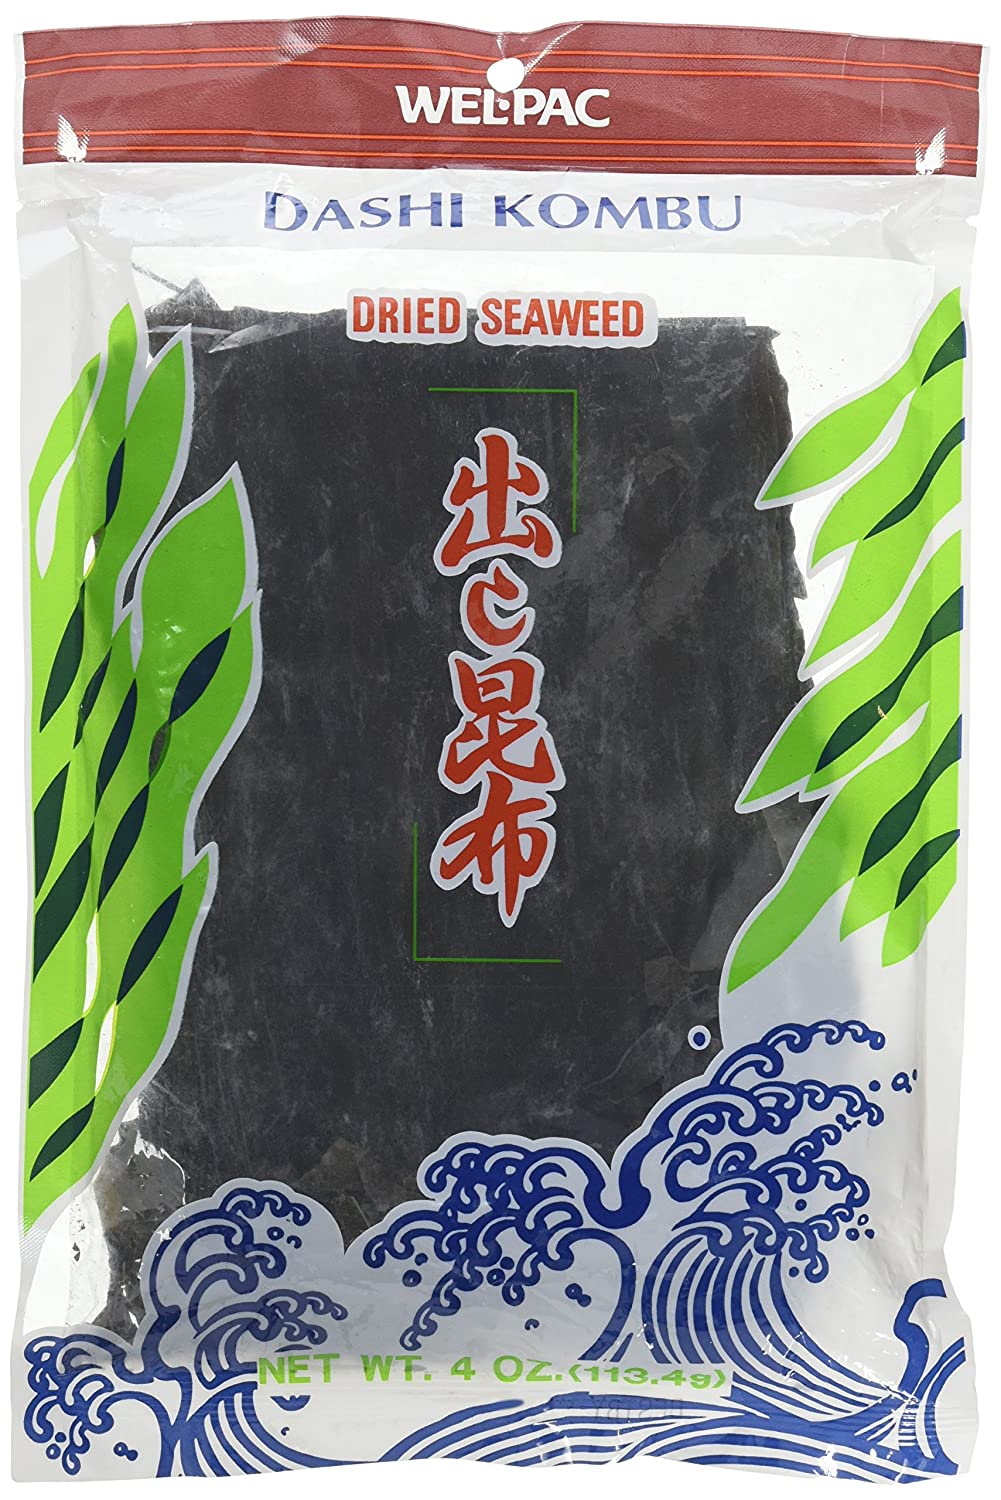 WEL-PAC Dashi Kombu Dried Seaweed Wel-Pac 